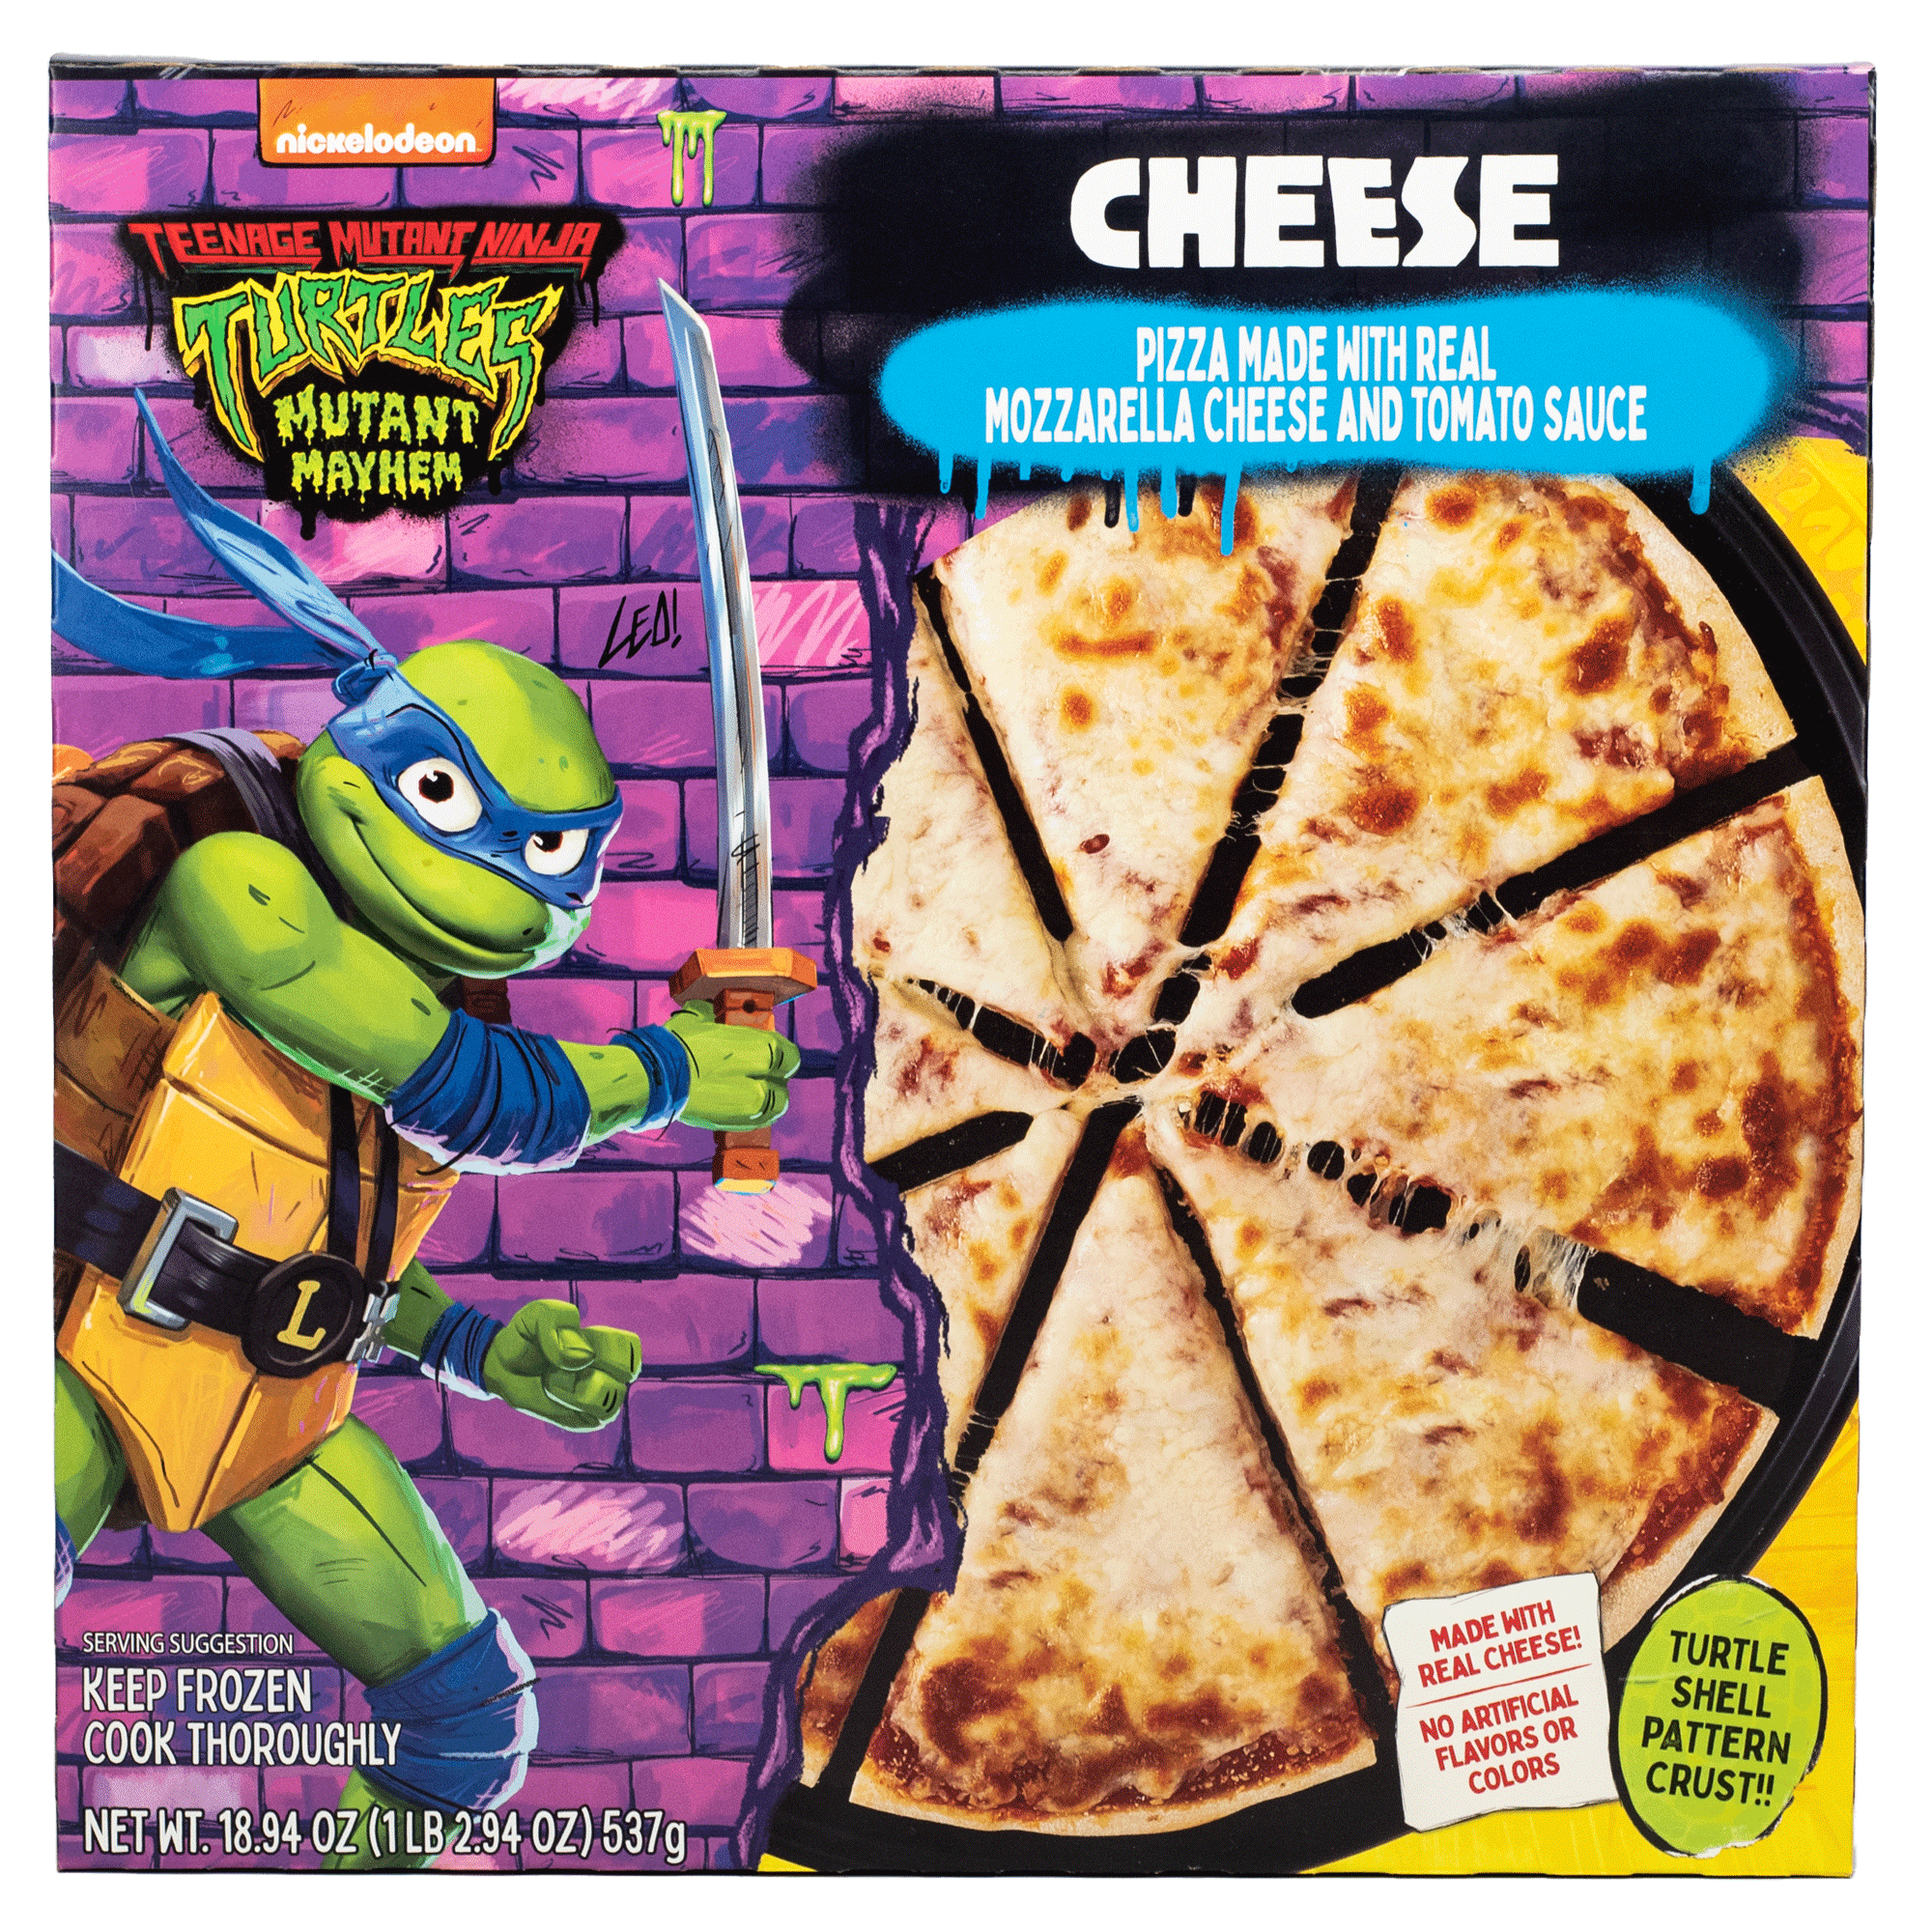 Teenage Mutant Ninja Turtles Cheese Pizza, Turtle Shell Pattern Crust,  Marinara Sauce, 18.94oz (Frozen)